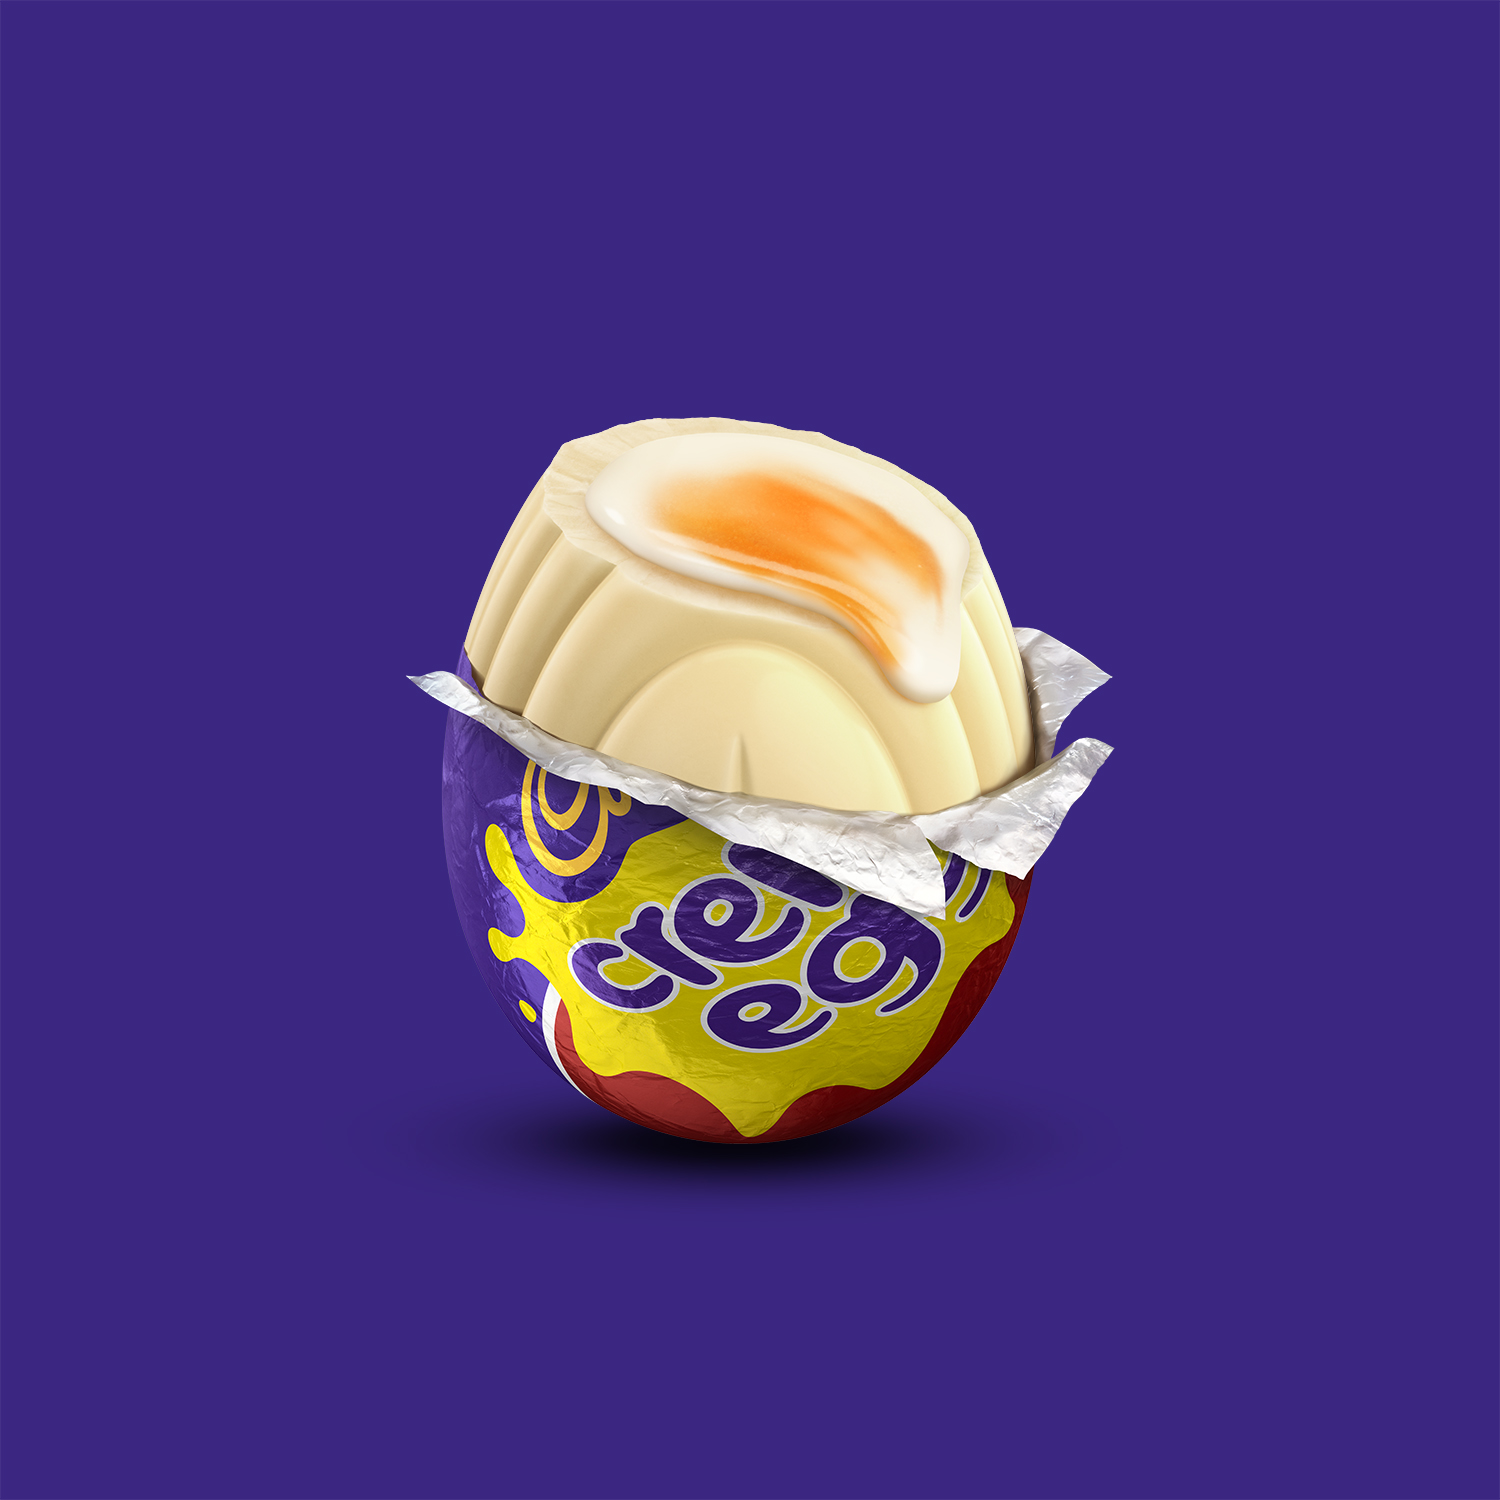 A white Cadbury Creme Egg